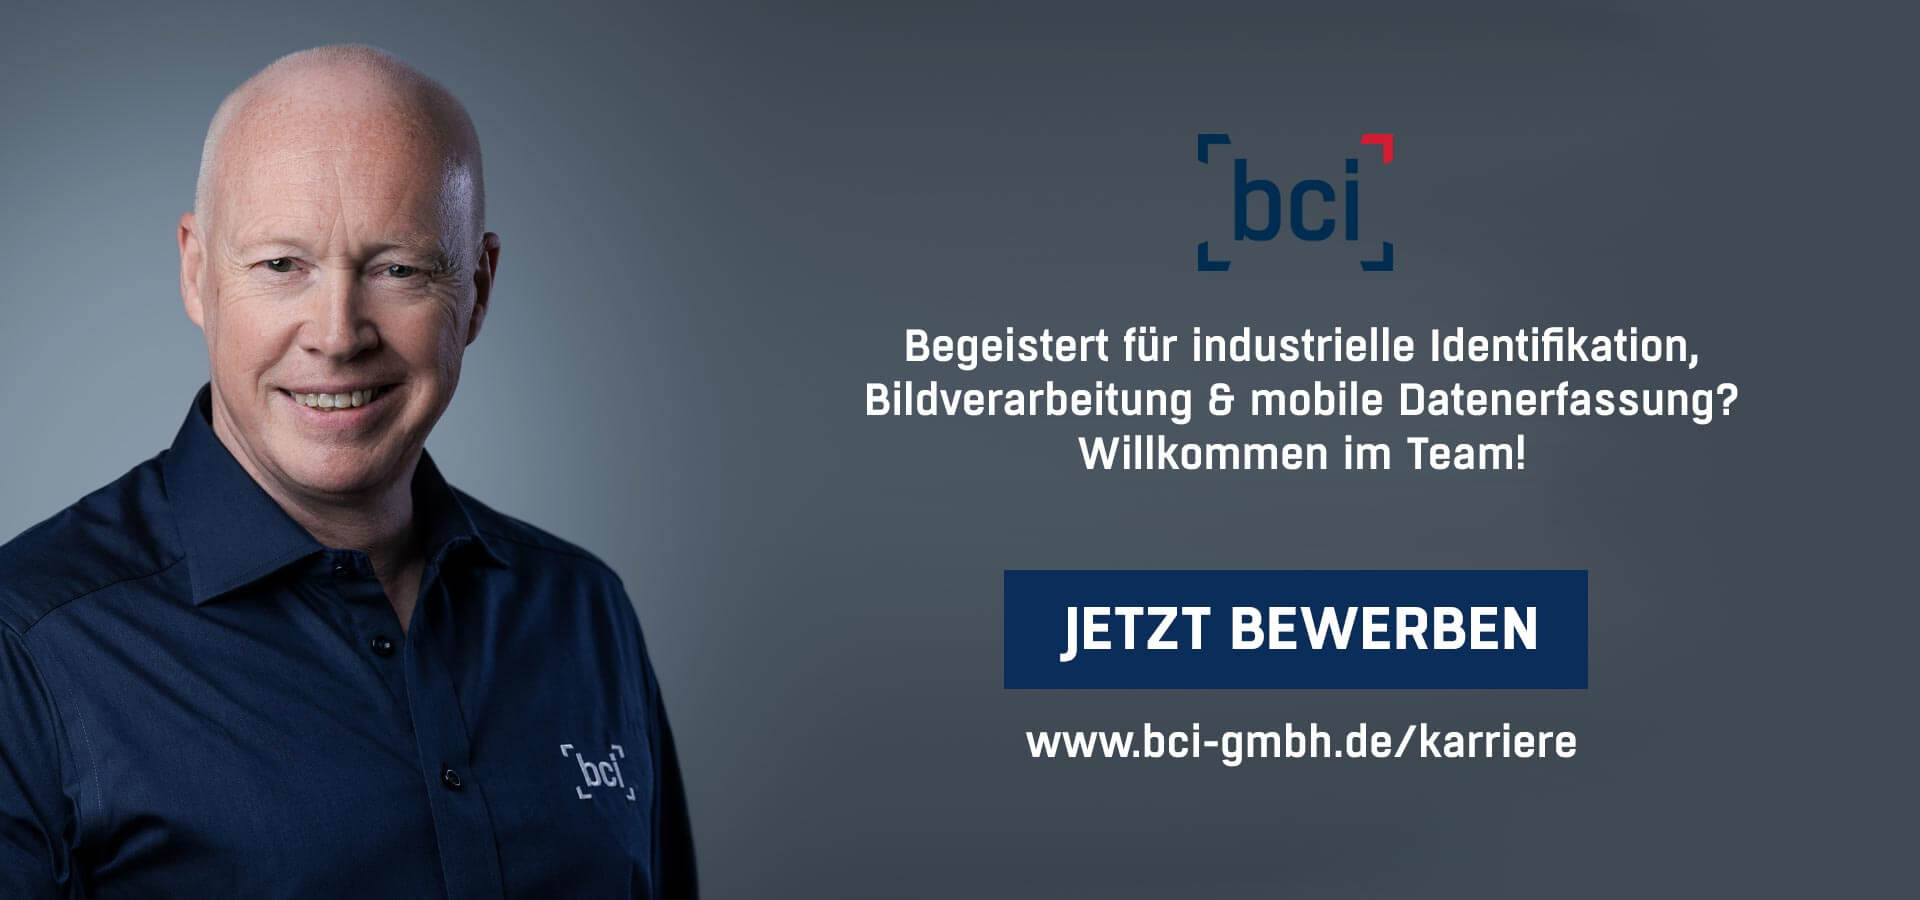 bci GmbH Karriere Jobangebote OG